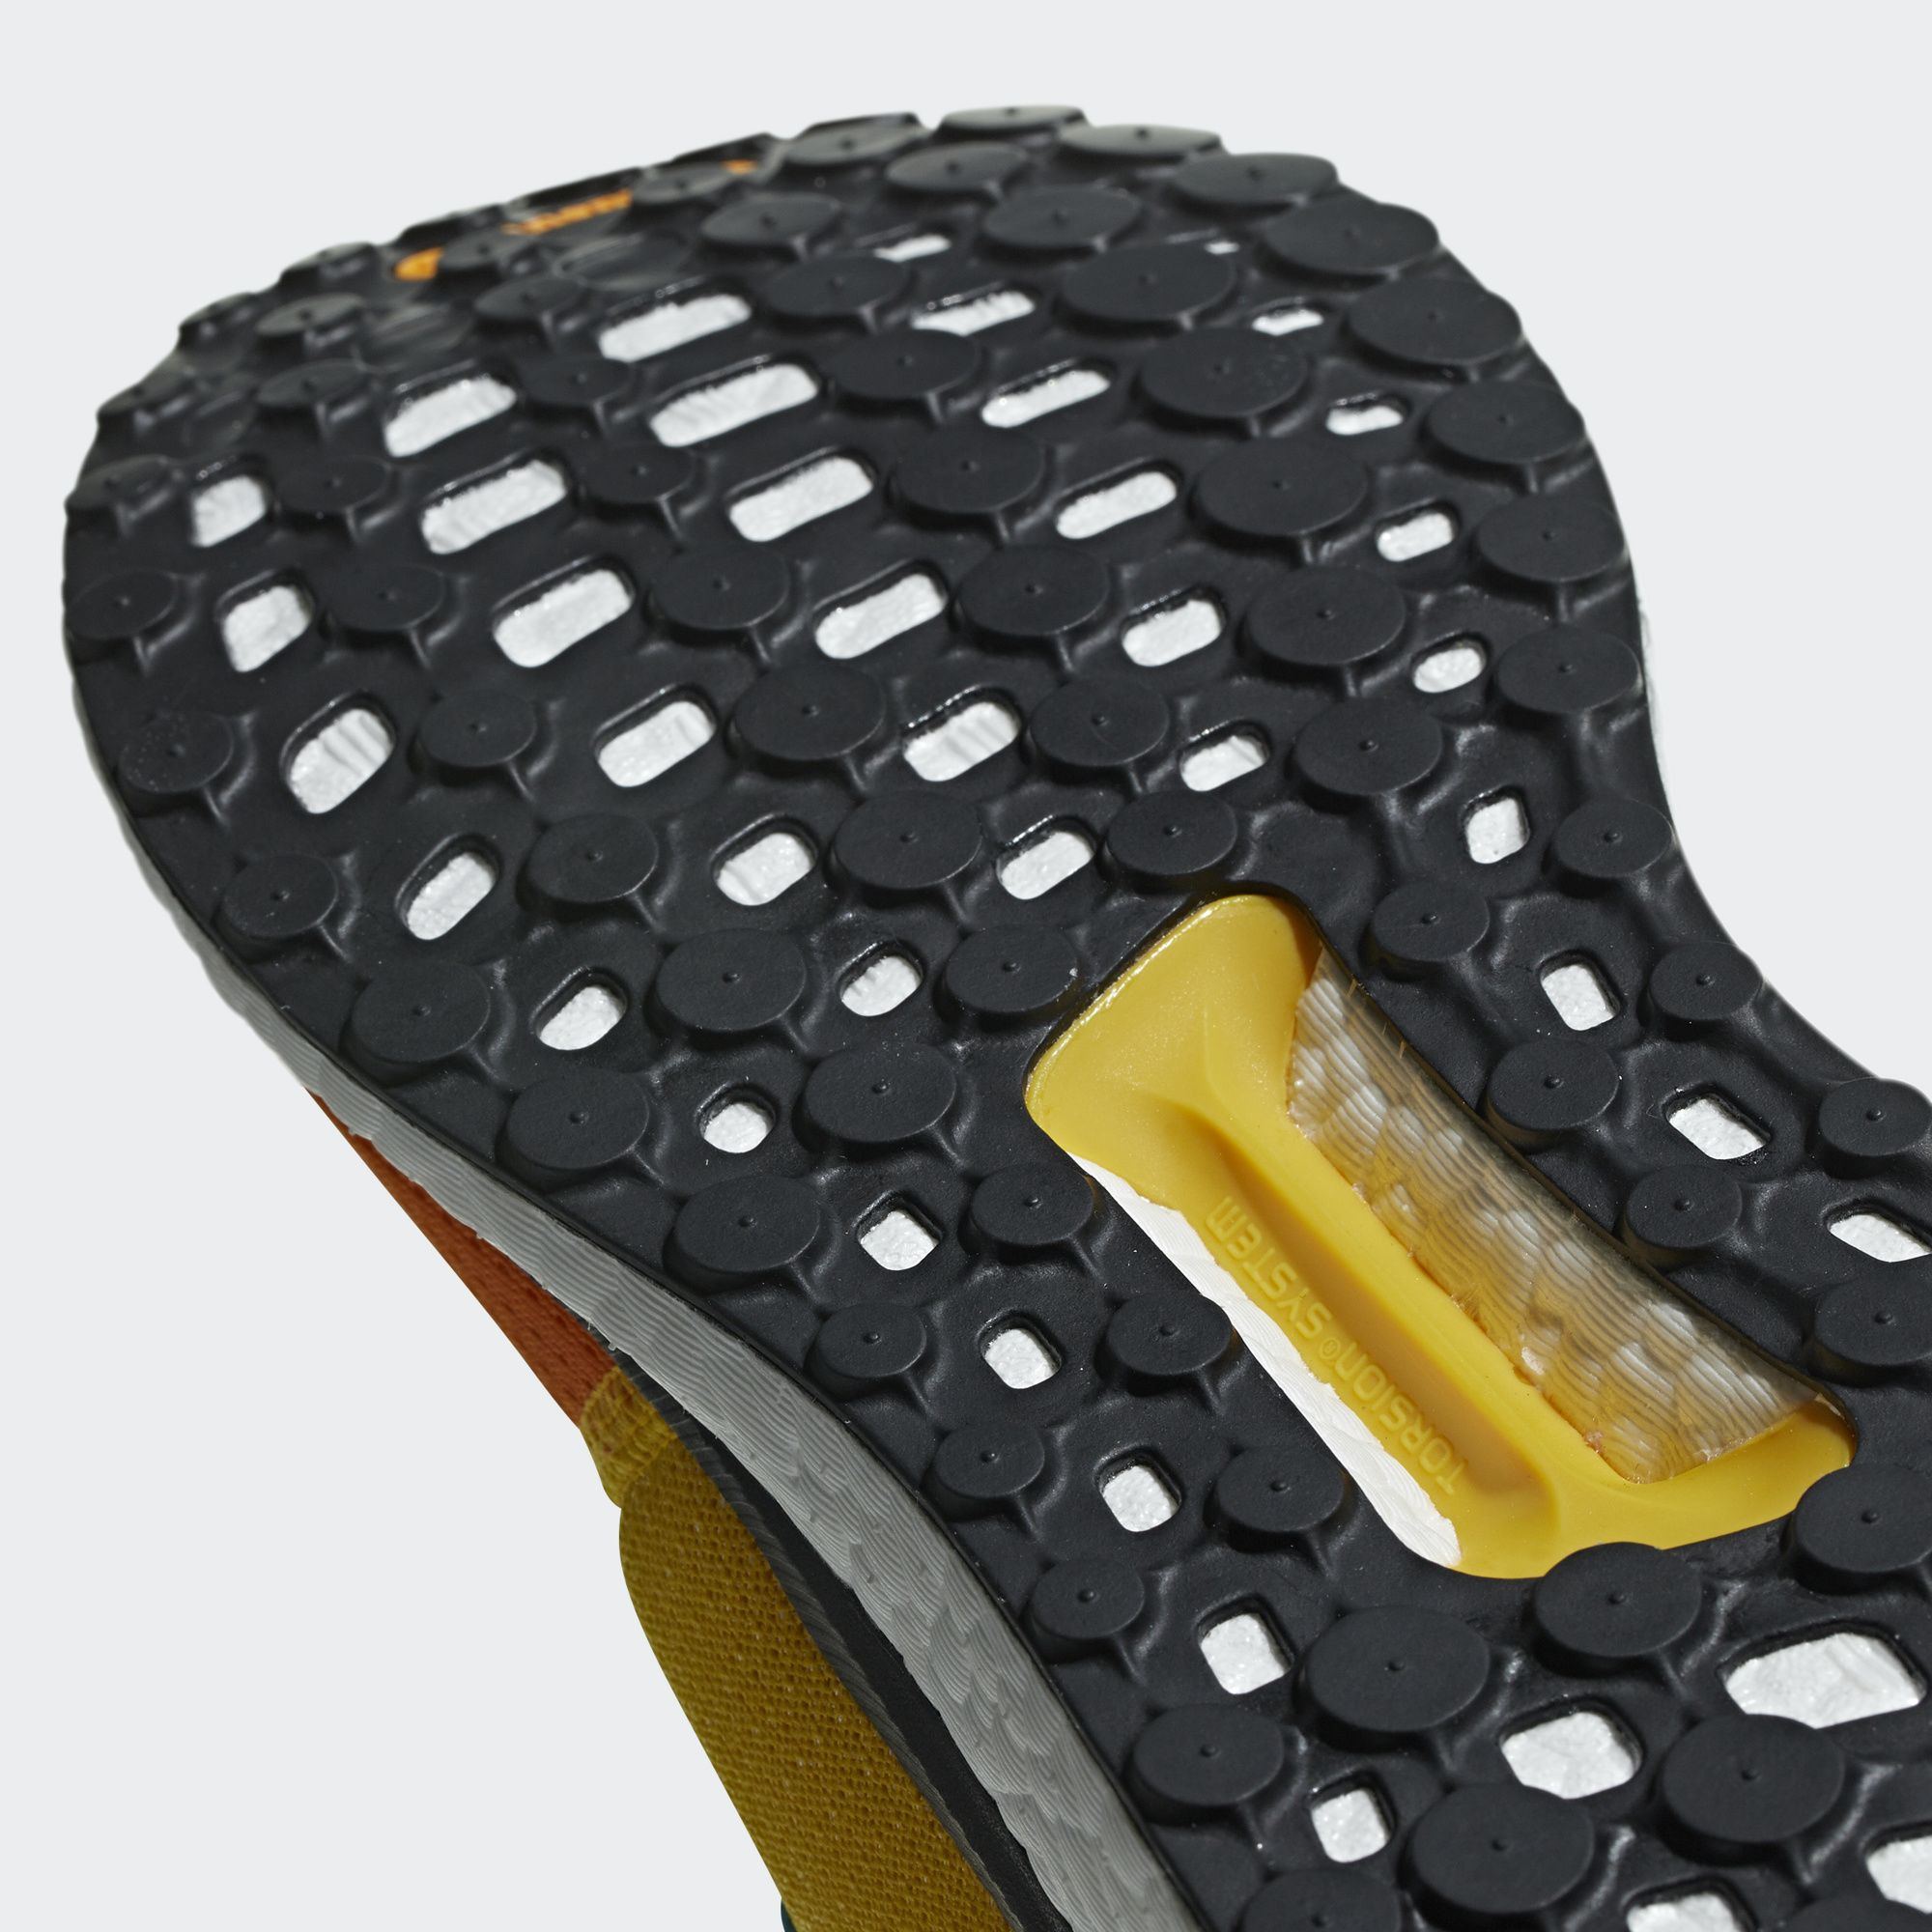 09-adidas-pharrell-williams-hu-solar-glide-00-bold-gold-bb8042